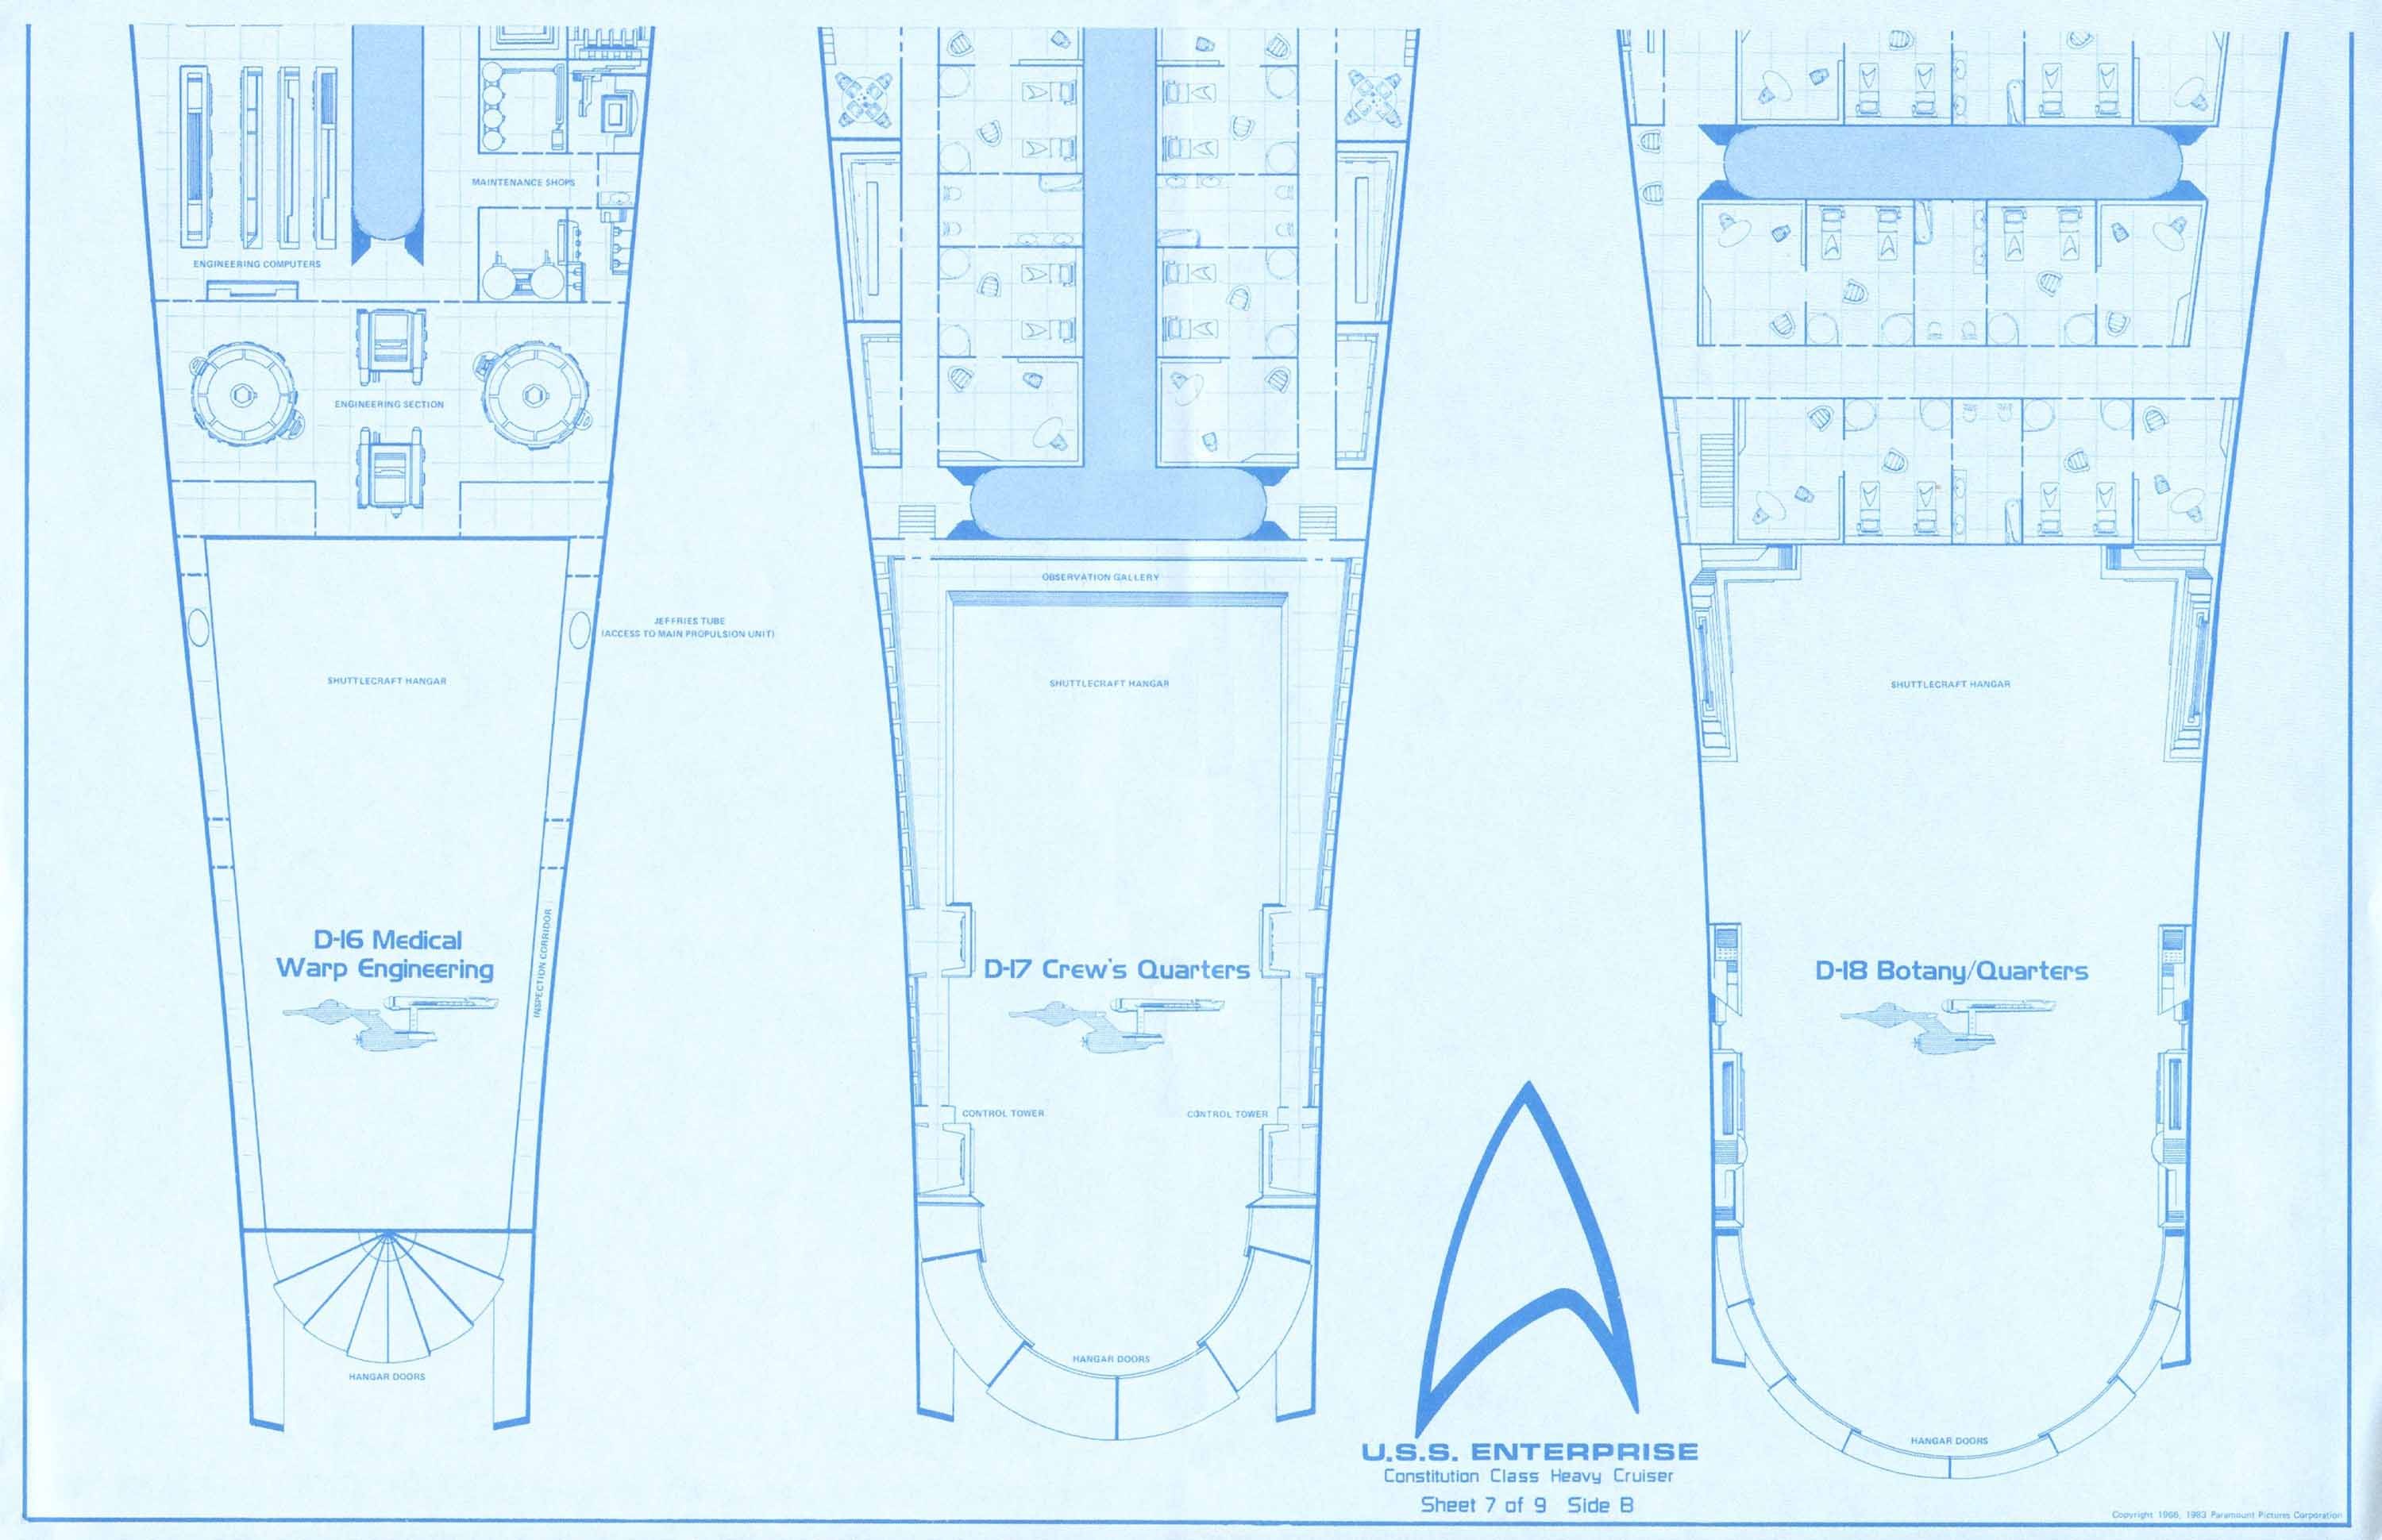 Star Trek, blueprints, spaceships, vehicles, USS Enterprise, Star Trek logos, Star Trek schematics - desktop wallpaper